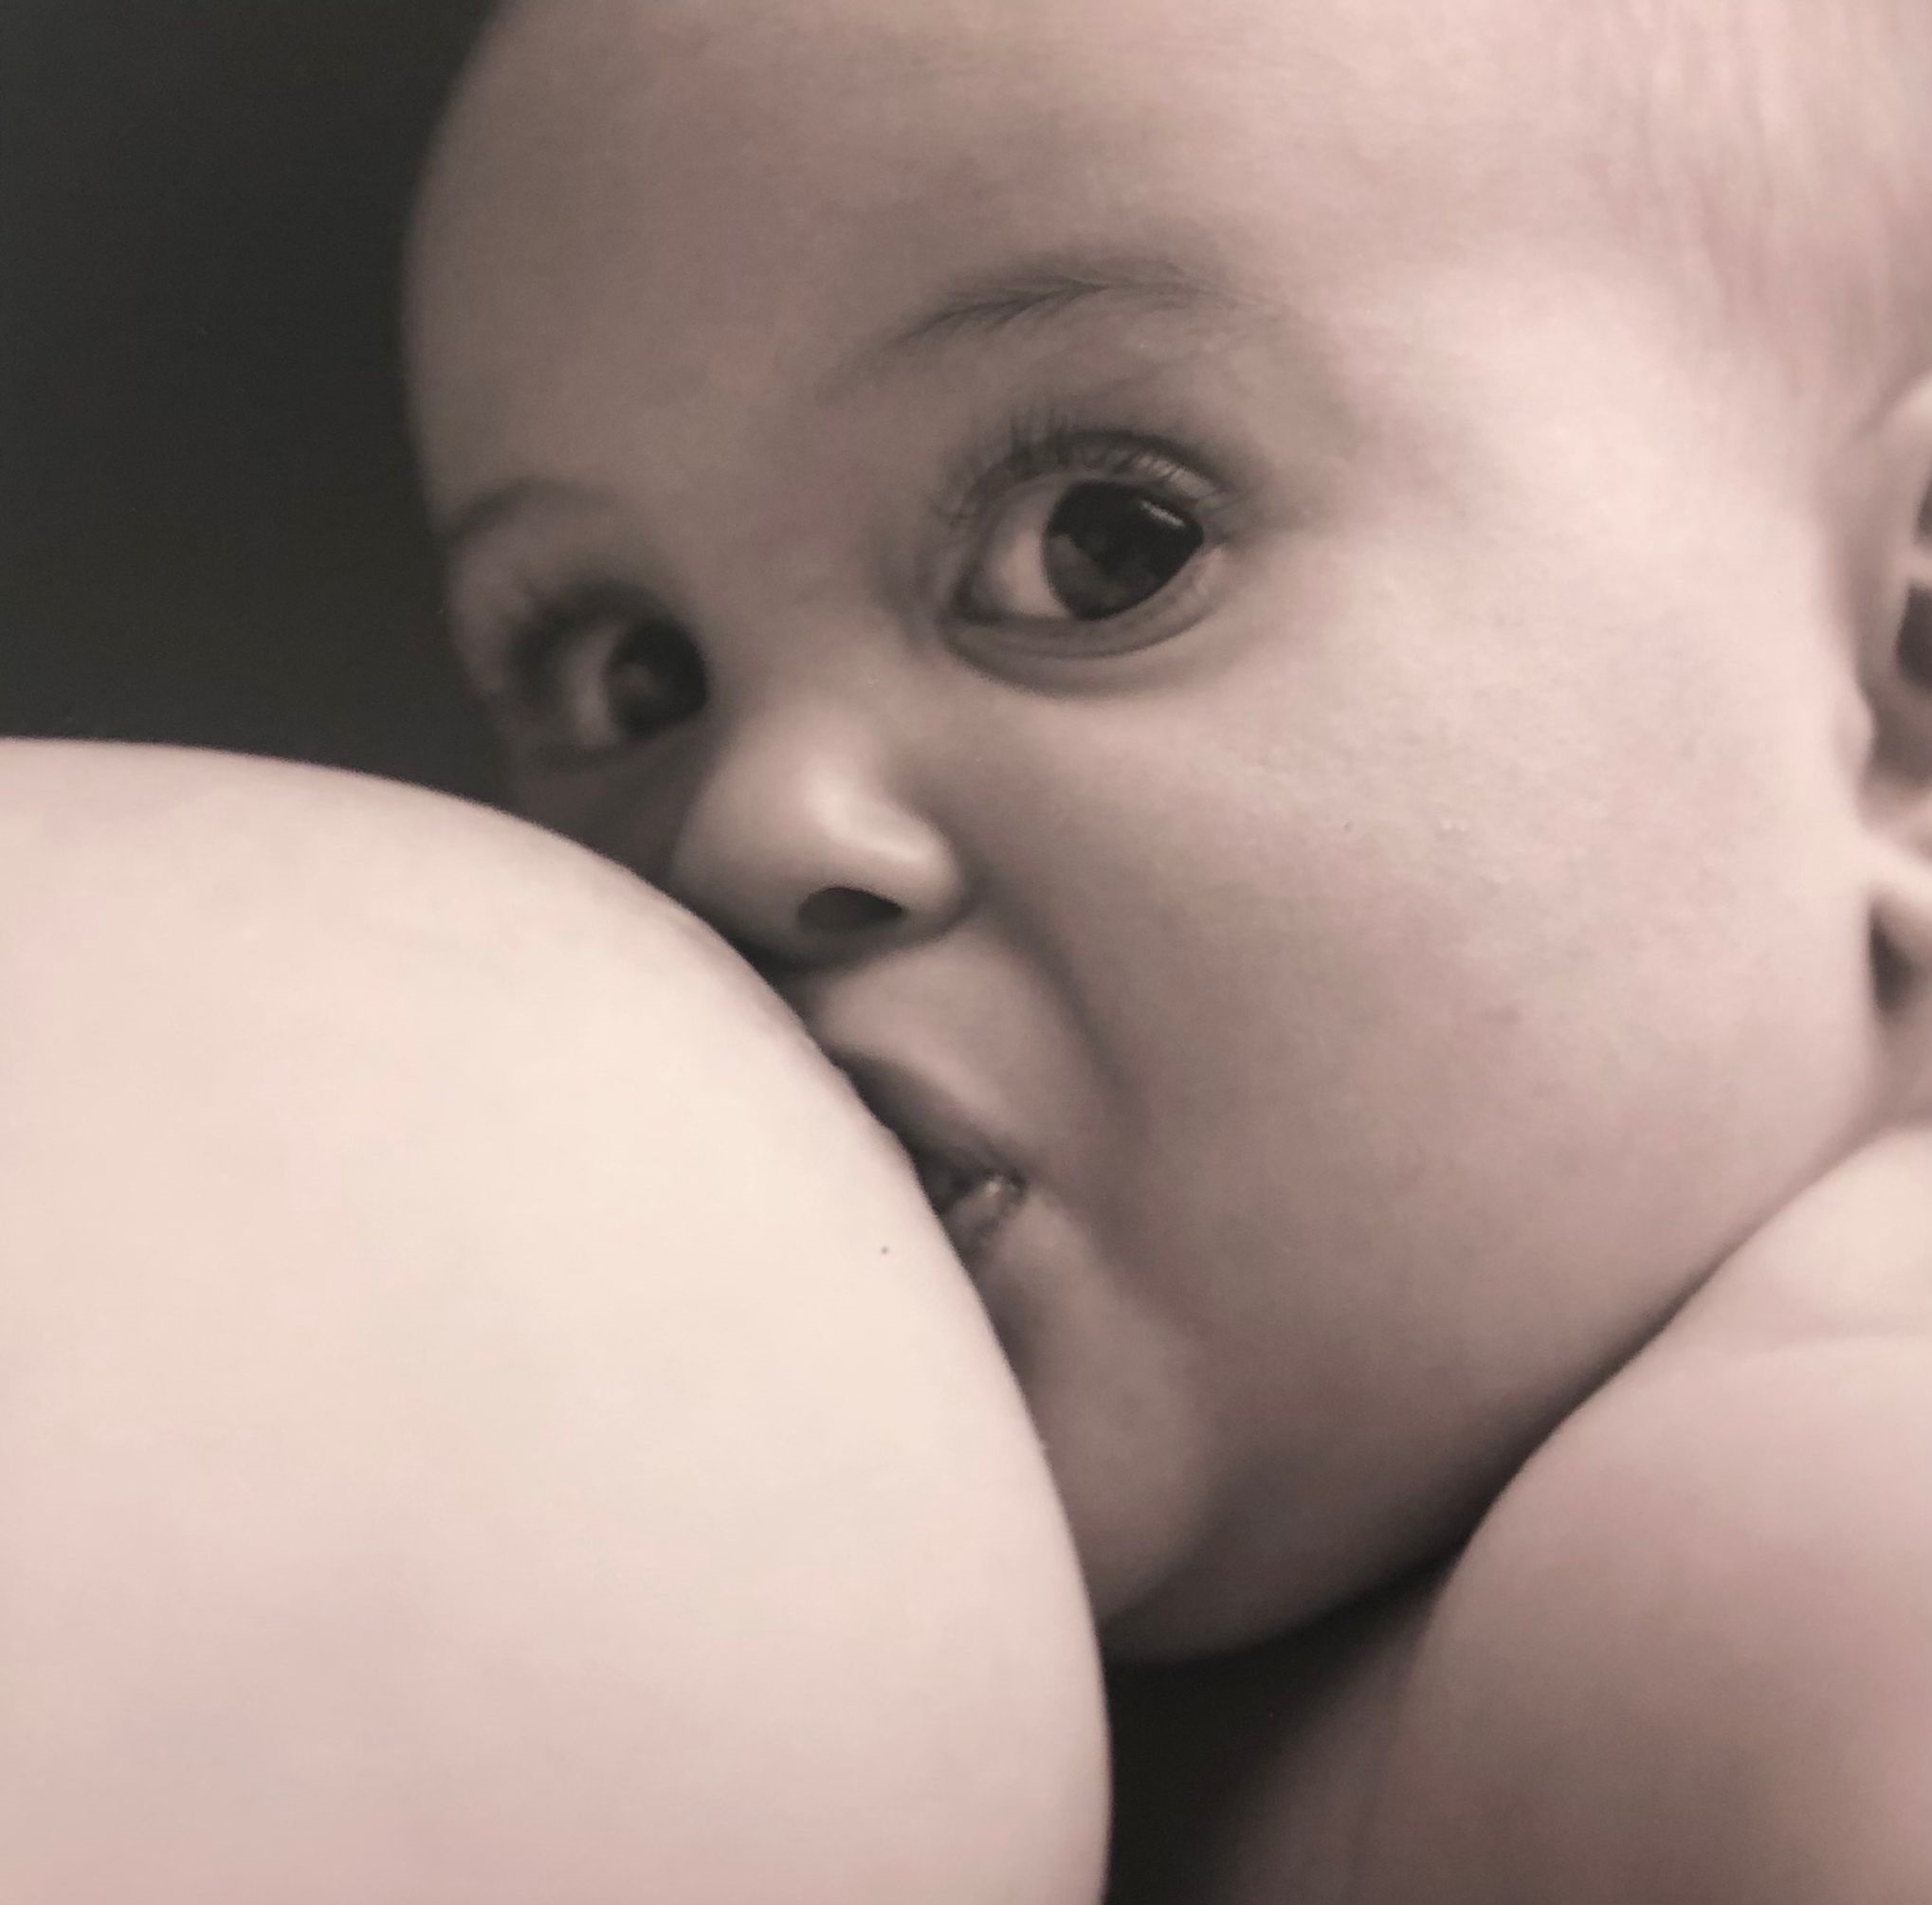 Ft. en lactancia materna